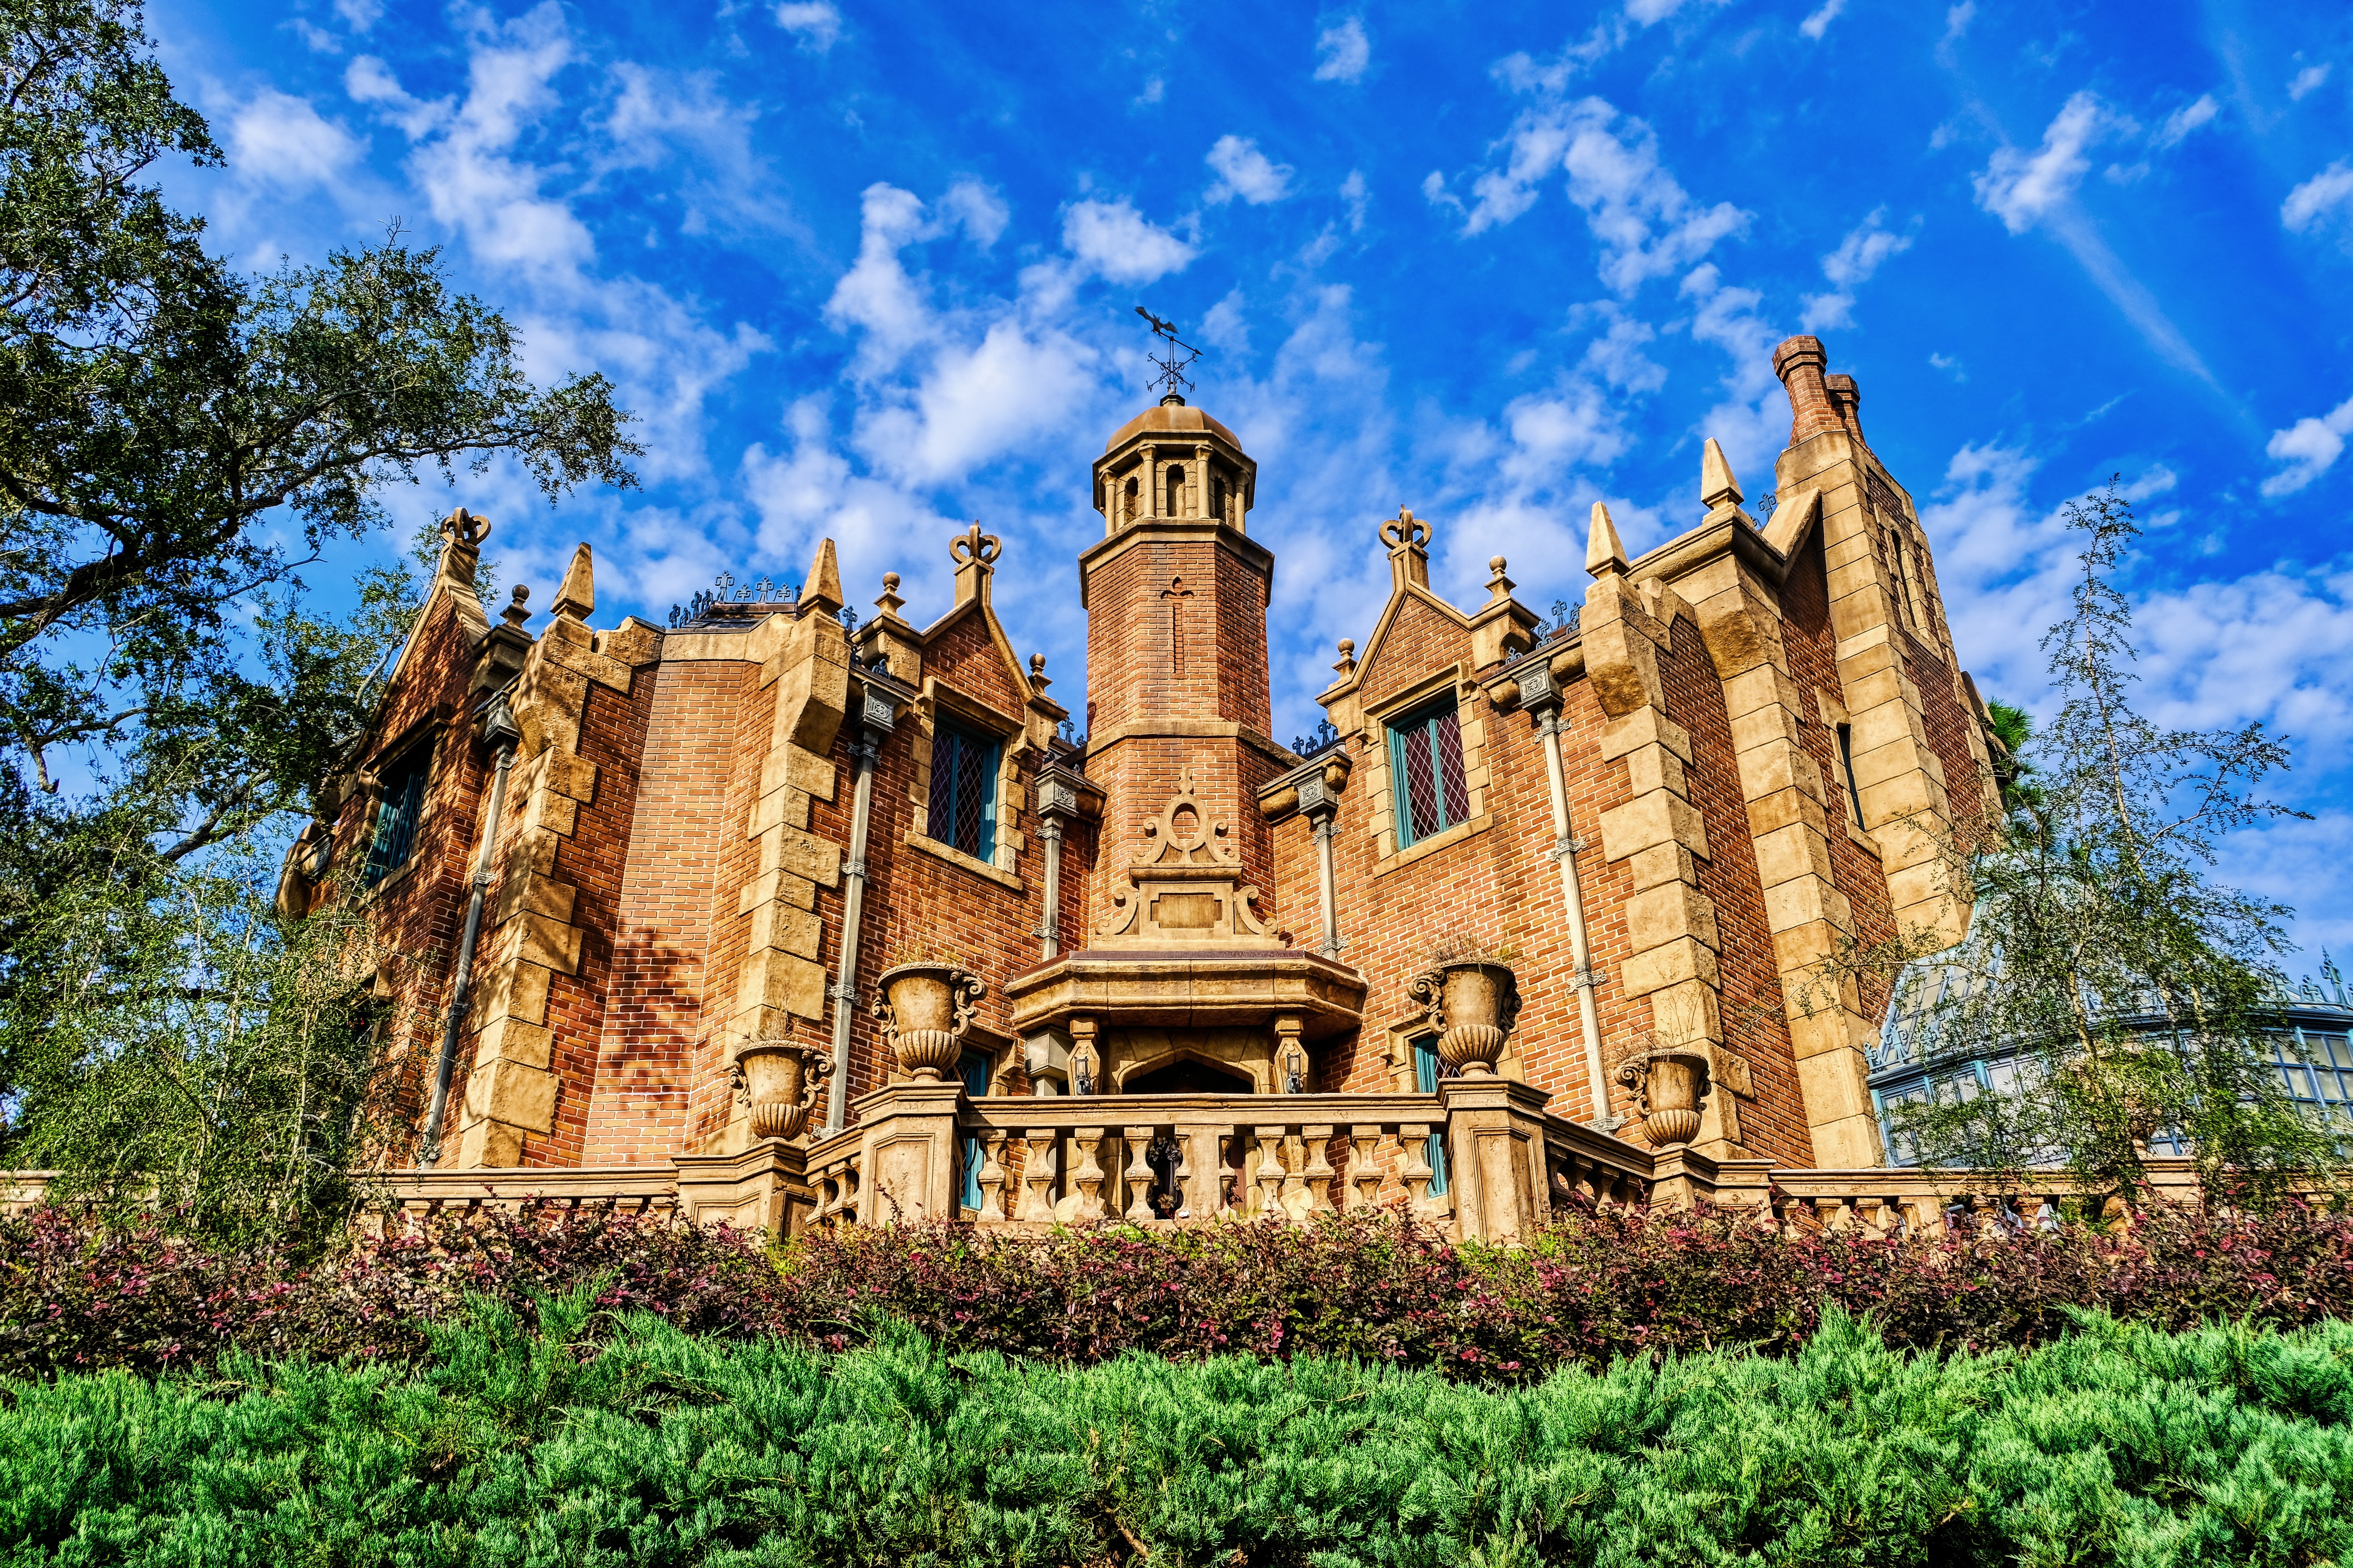 The Haunted Mansion at Disney's Magic Kingdom